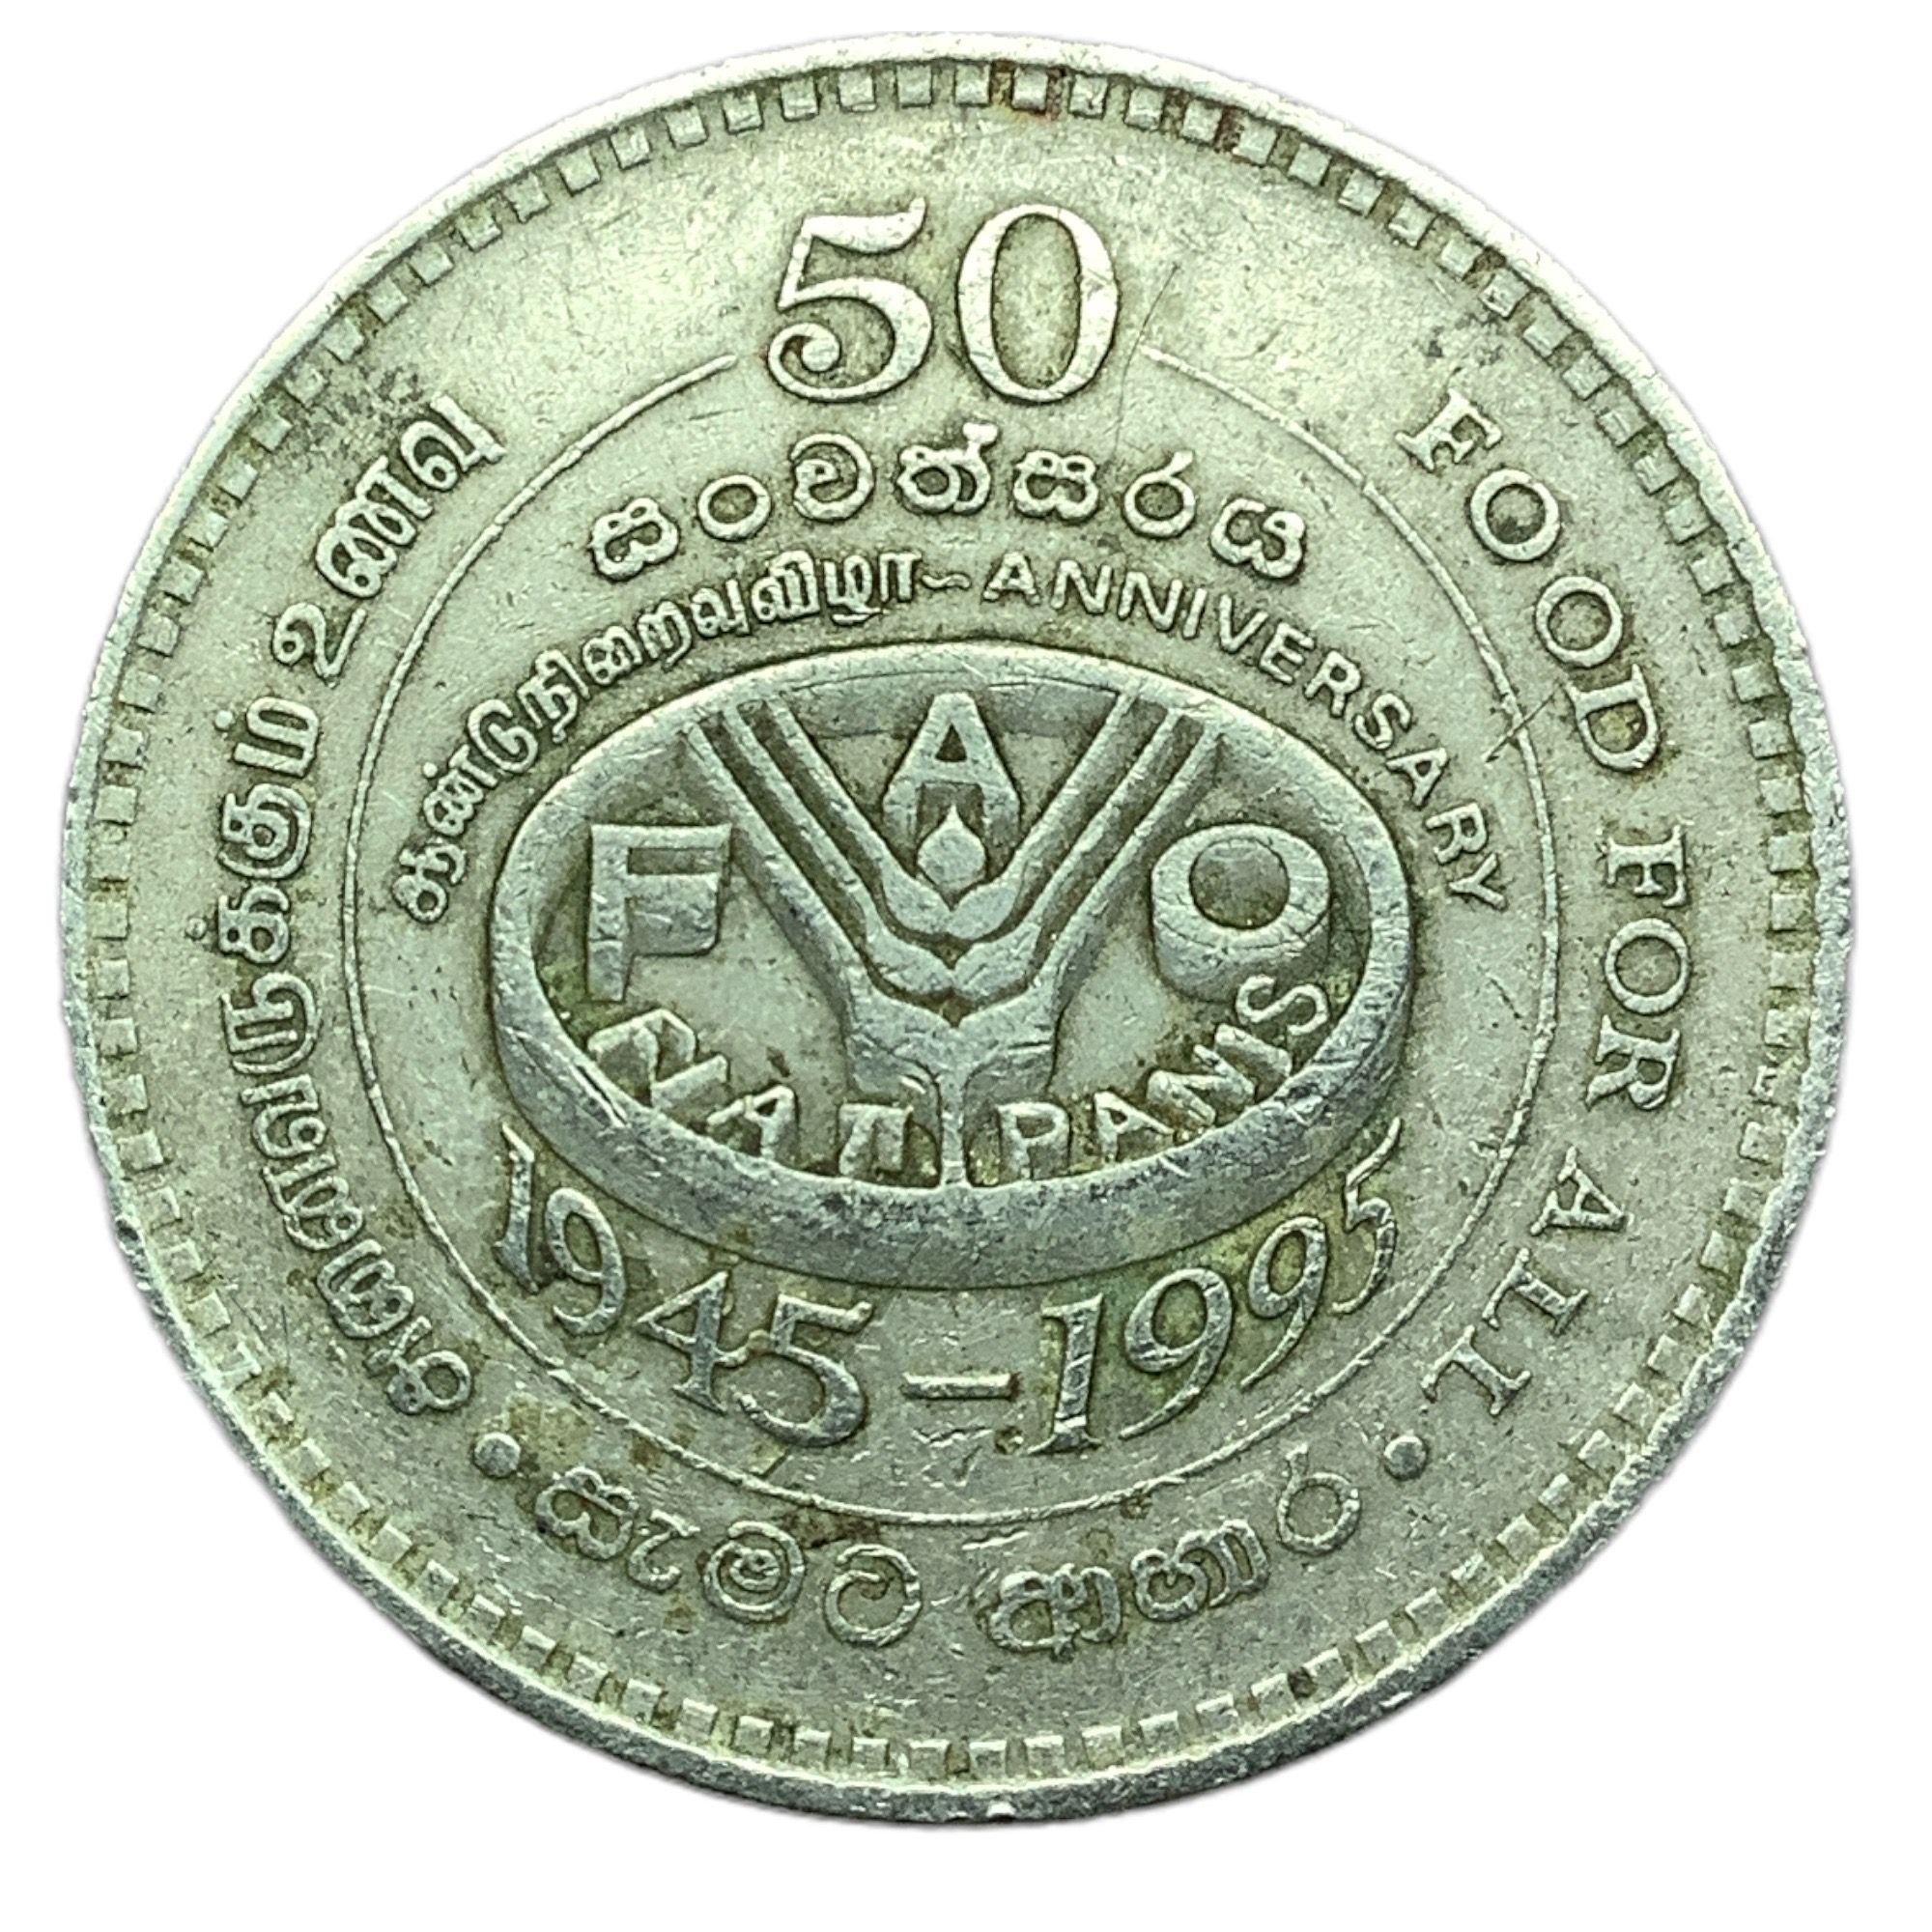 Монеты шри ланки. Шри-Ланка 2 рупии, 1995. Шри Ланки монеты современные. Железные монеты Шри Ланки.